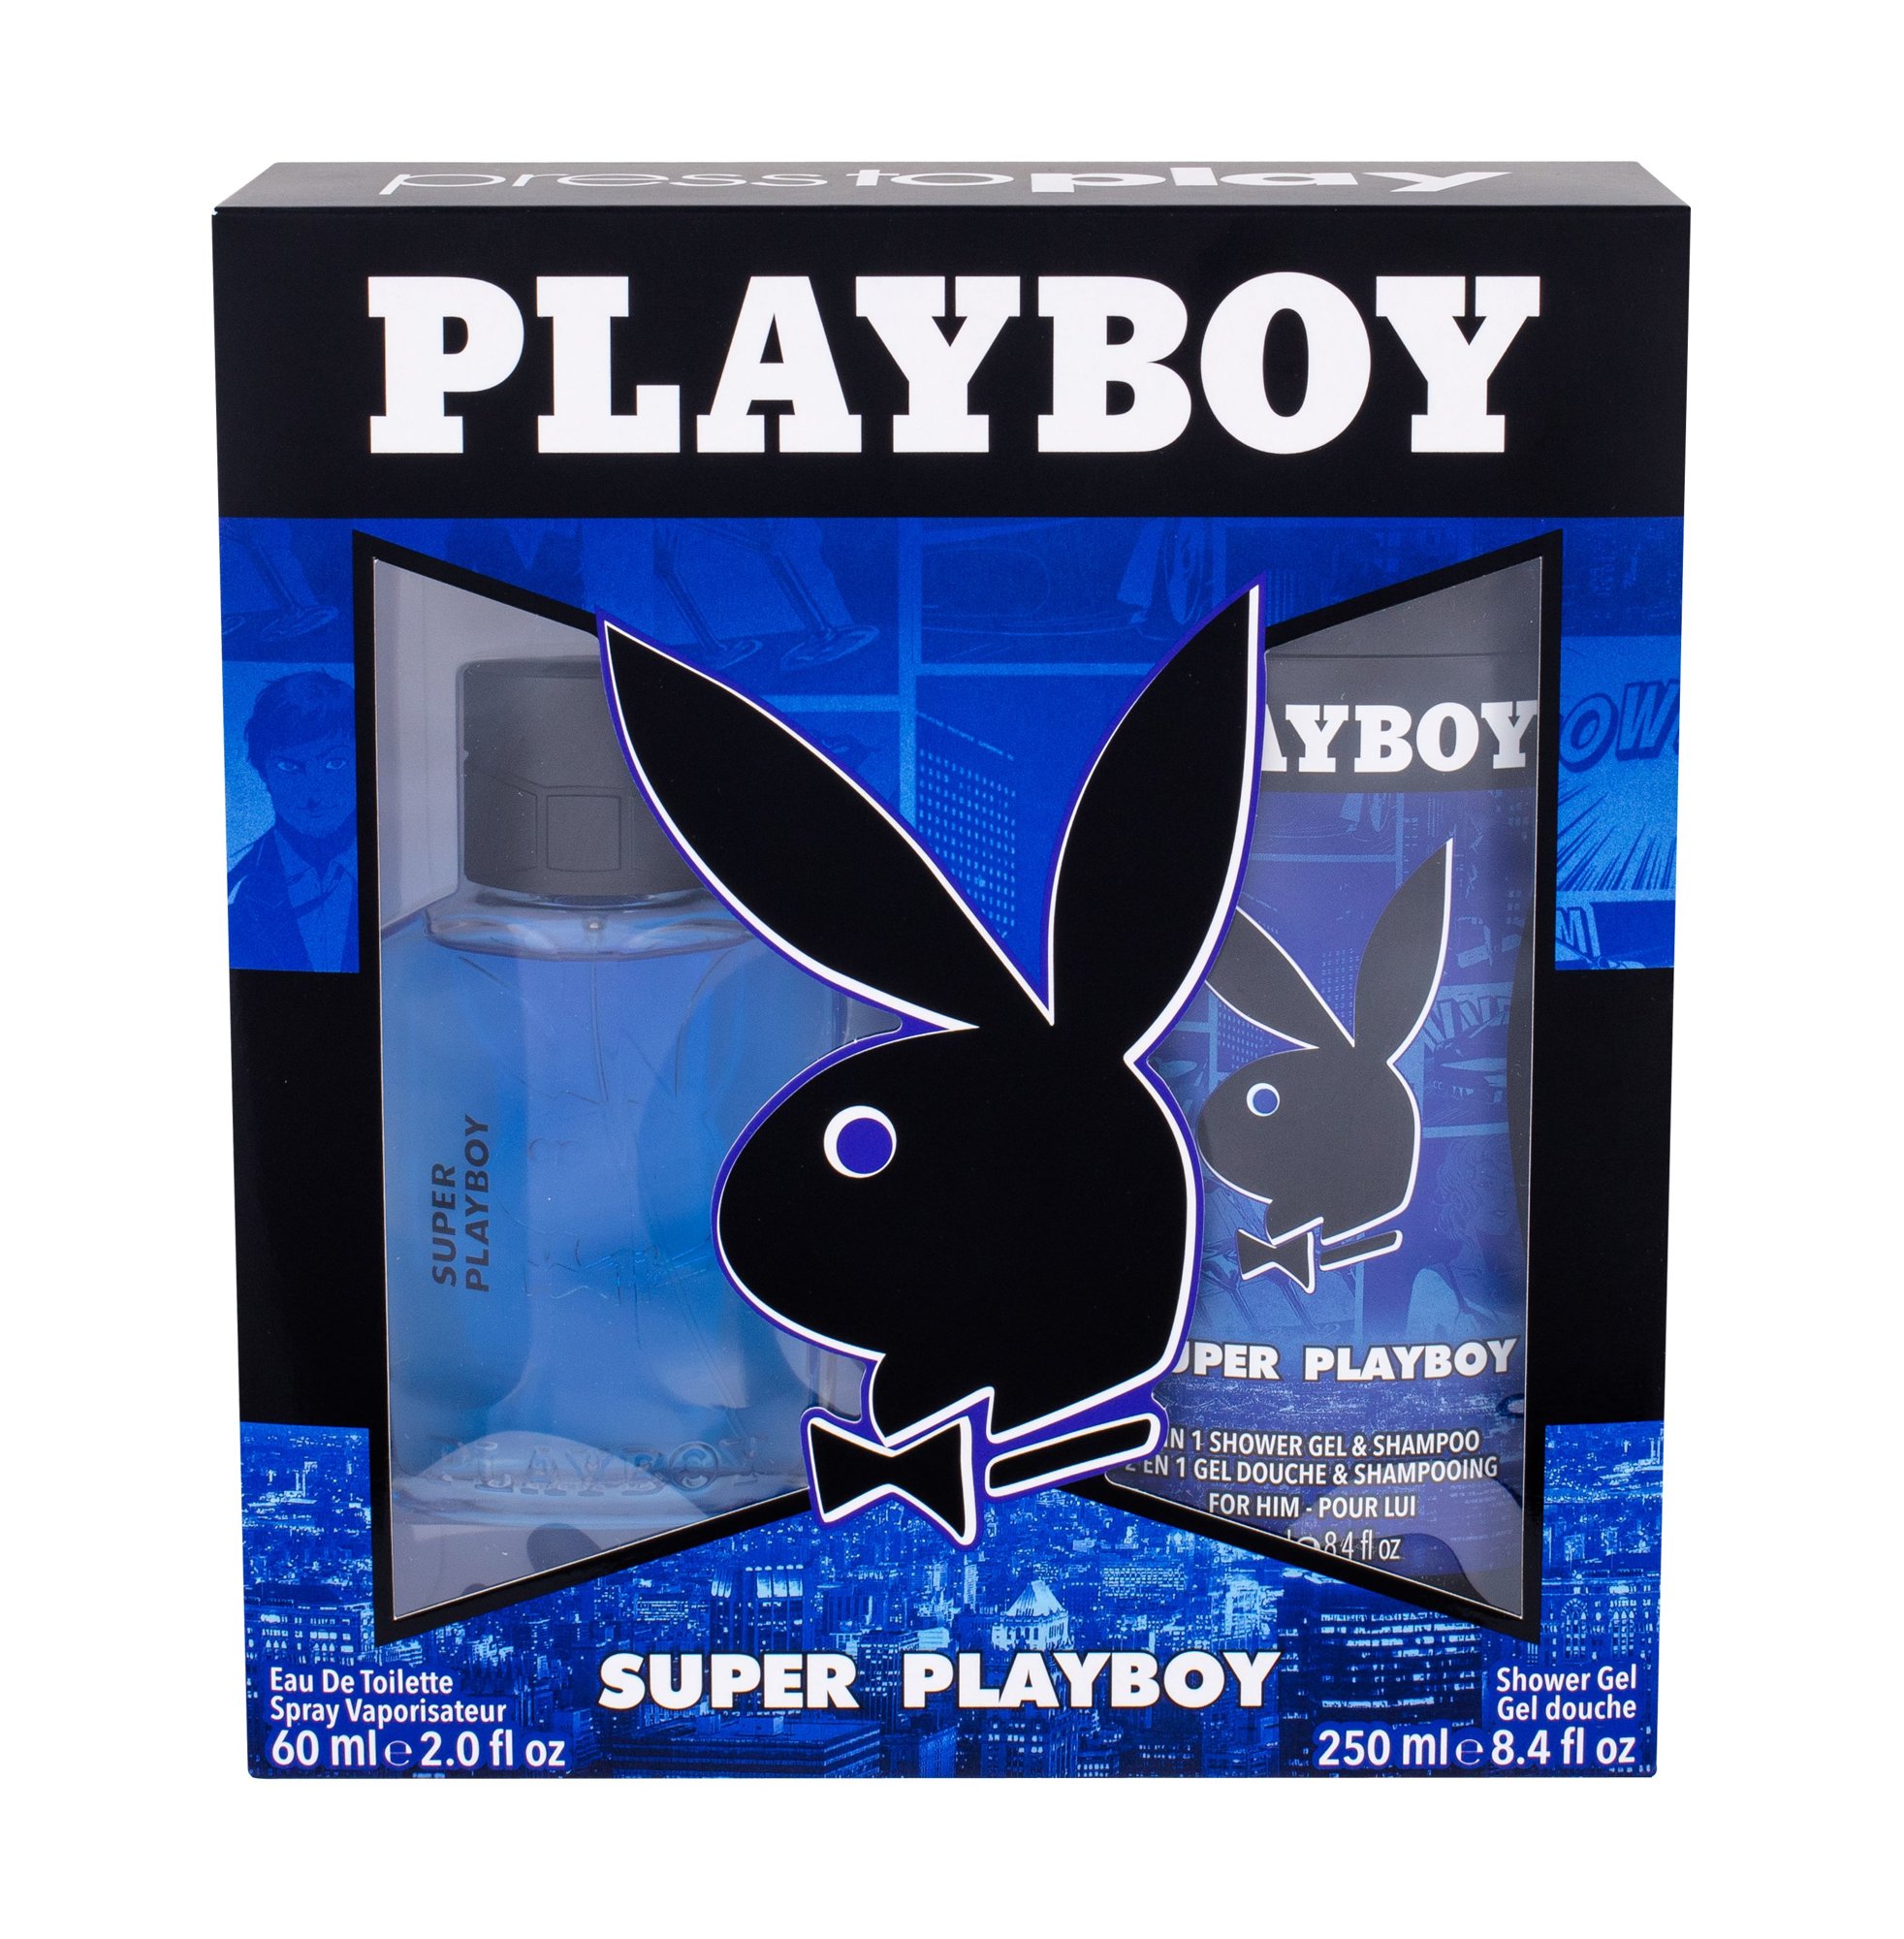 Playboy Super Playboy For Him